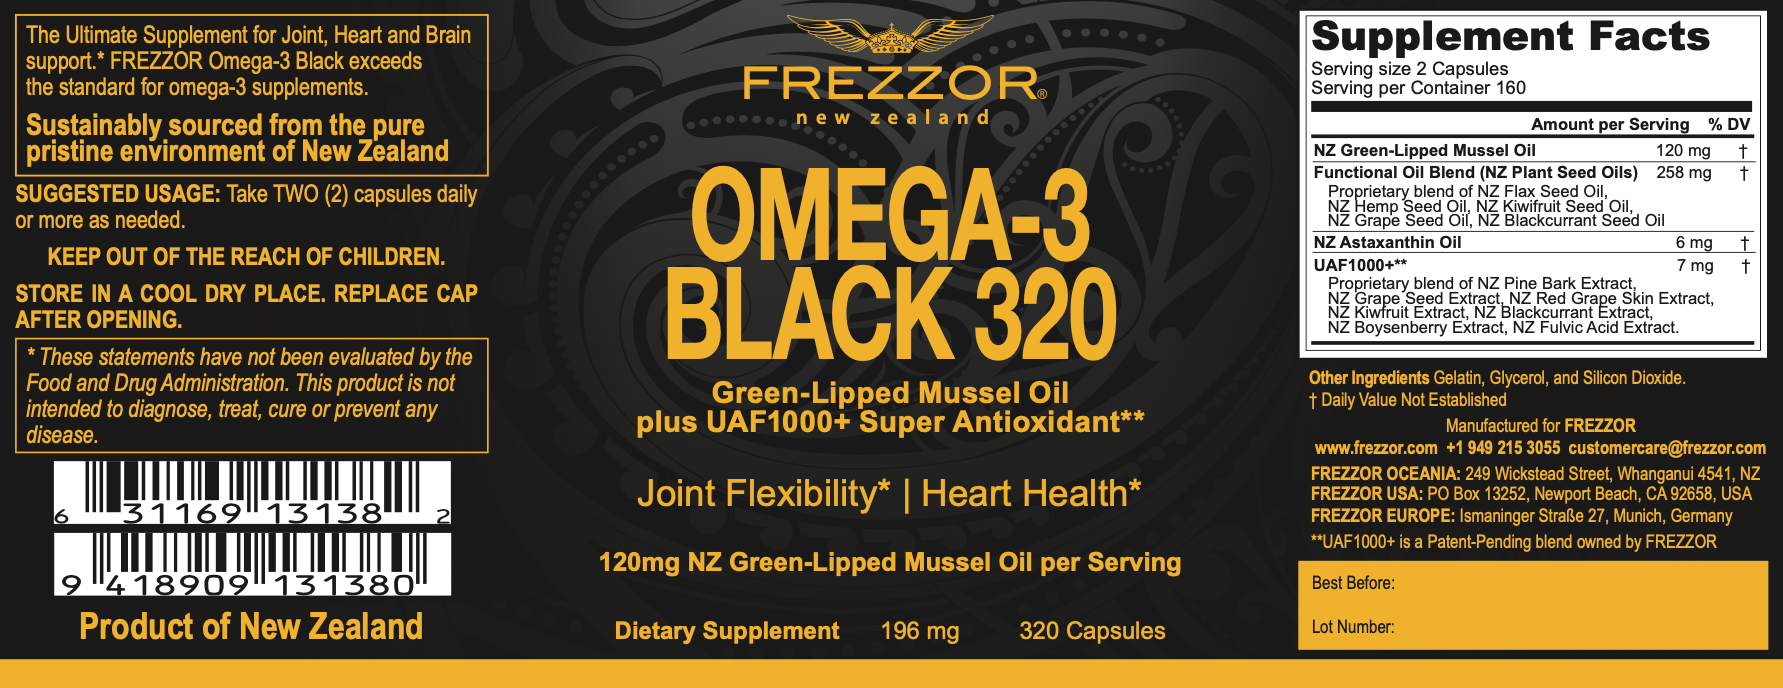 Omega-3 Black 320